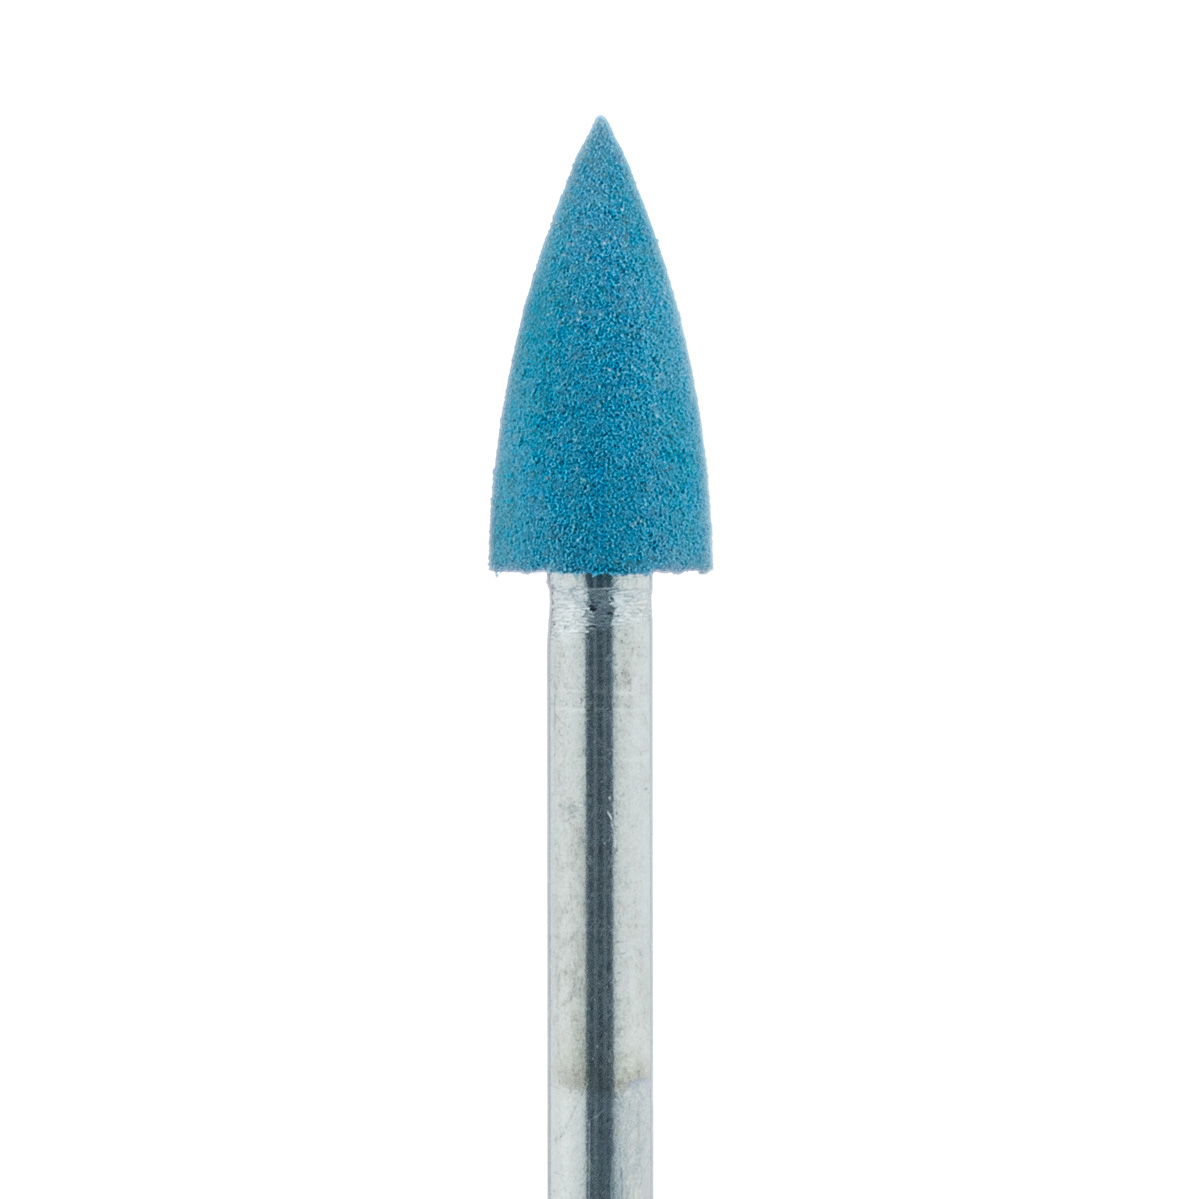 9741M-030-FG-BLU Polisher, Diamond Impregnated Porcelain Polisher, Blue Point, 3mm Ø, Polishing, Medium, FG